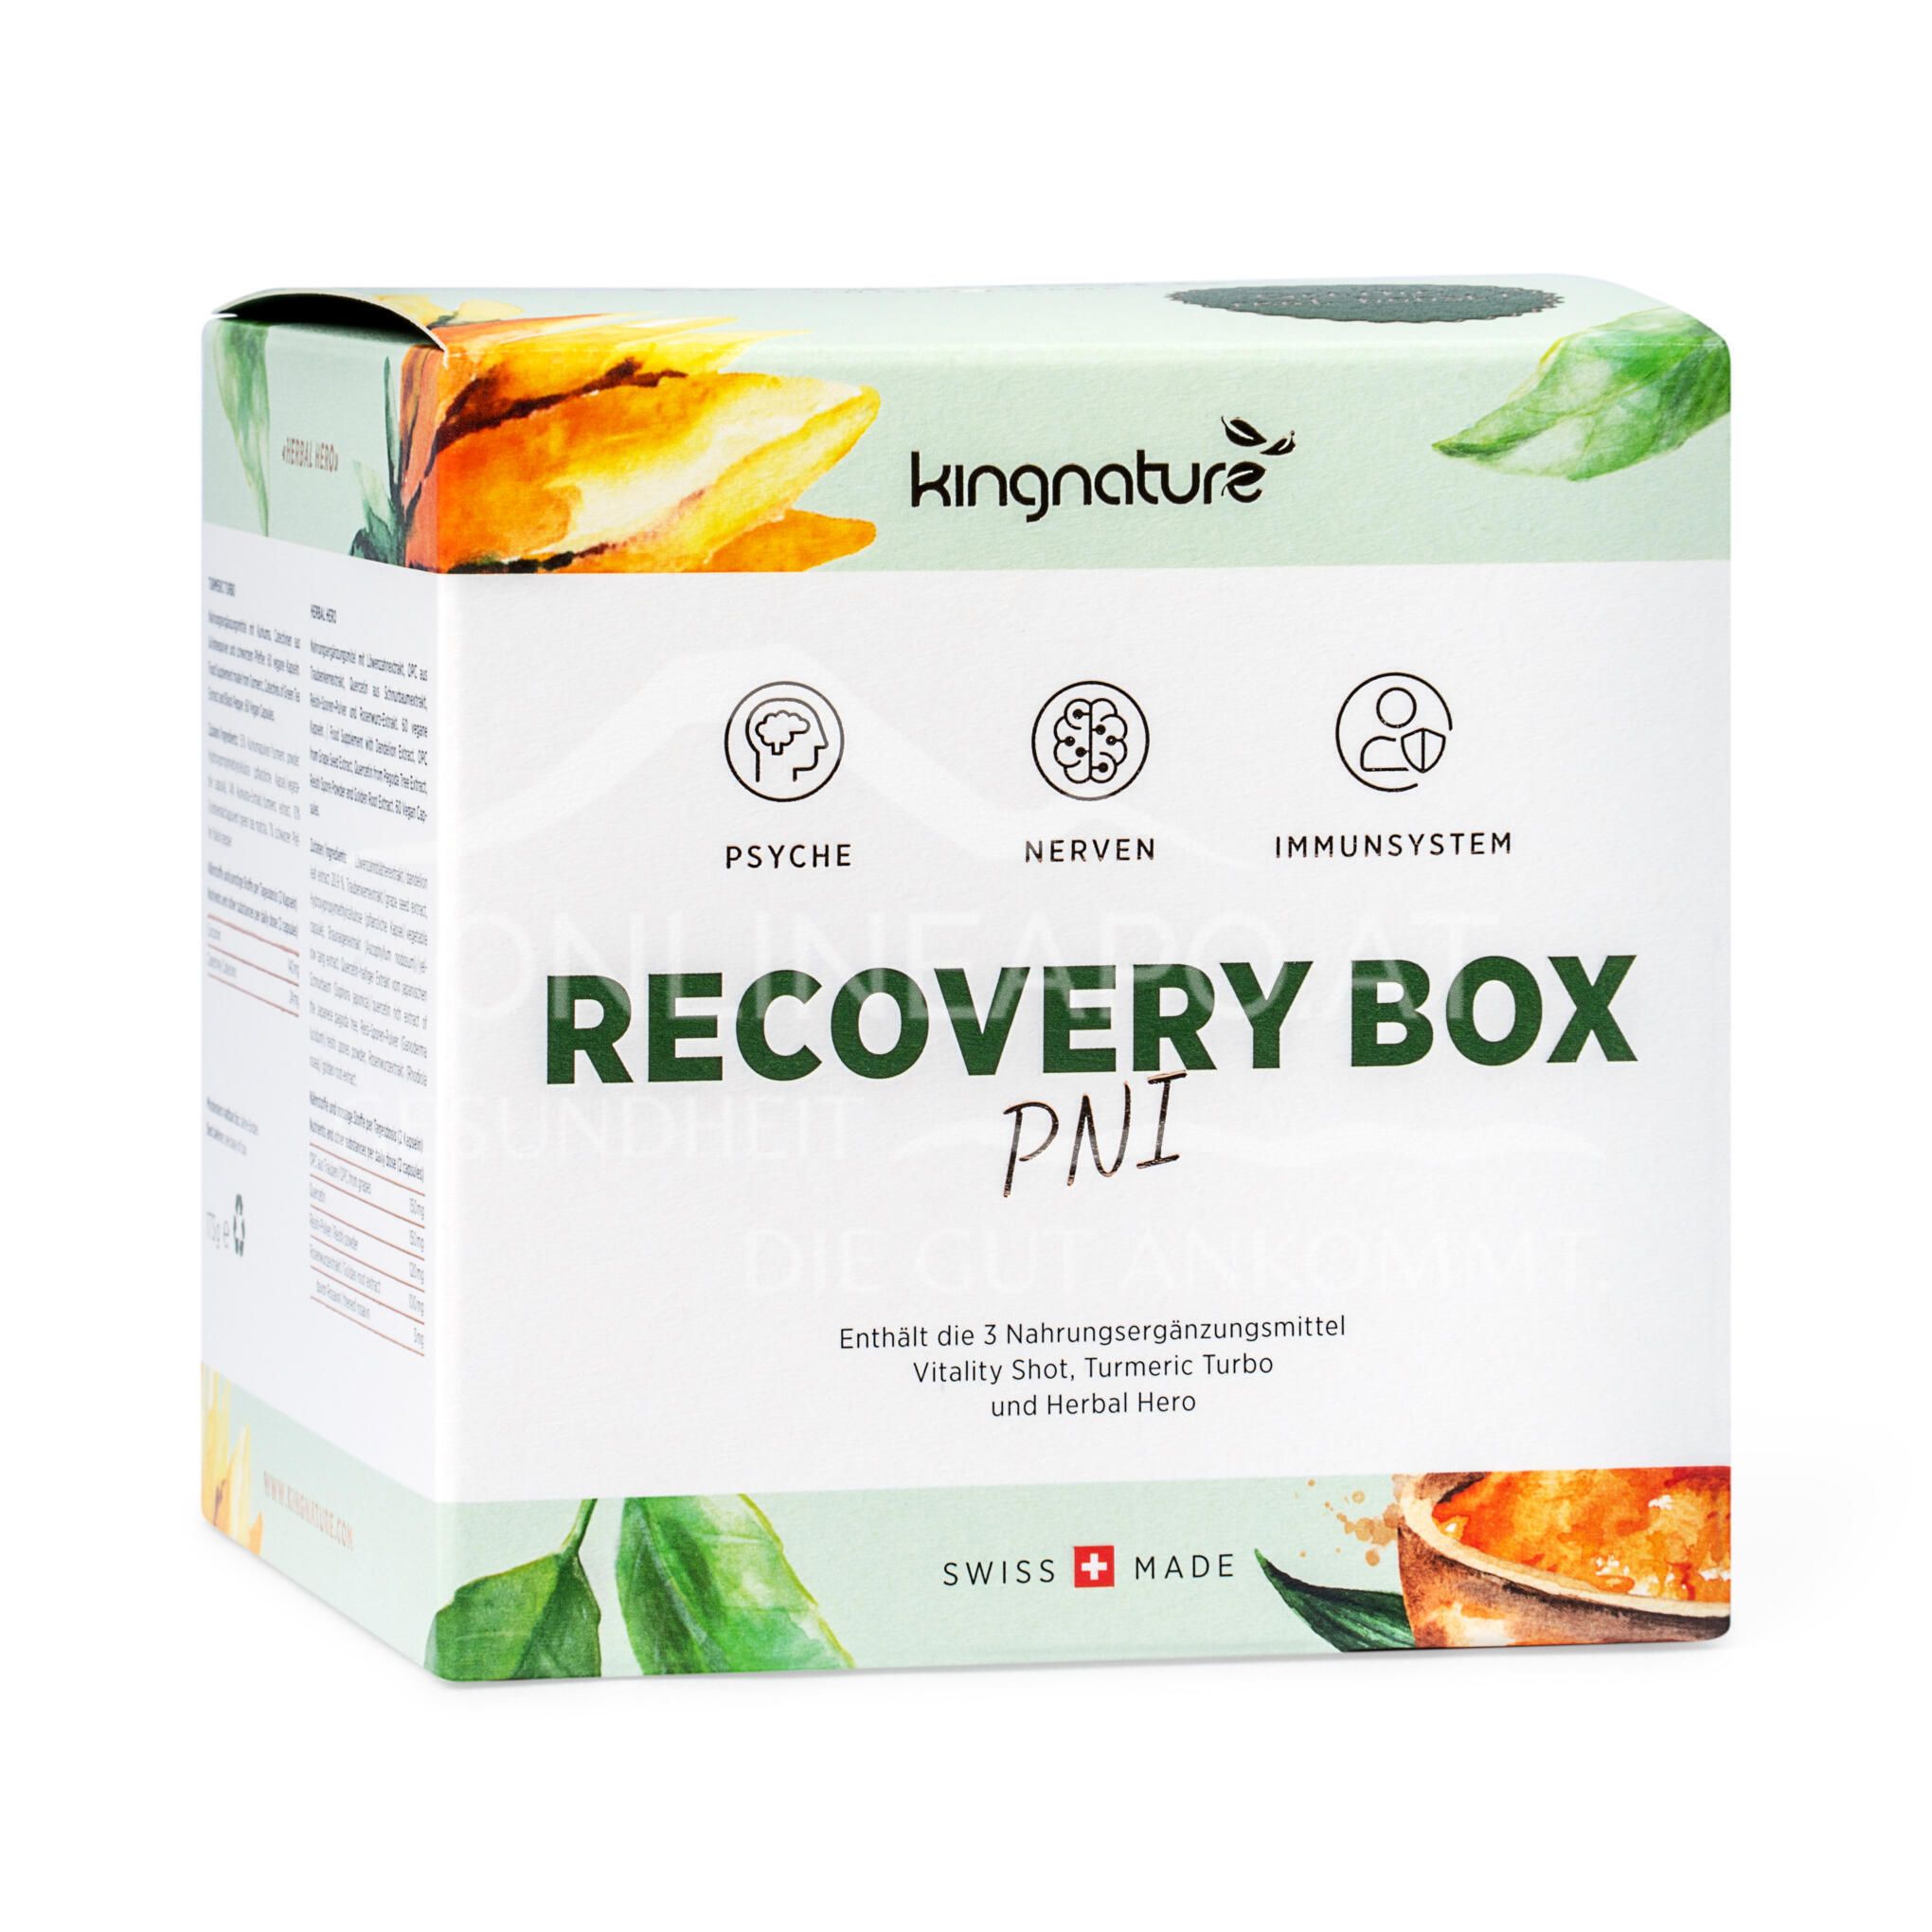 Kingnature Recovery Box PNI